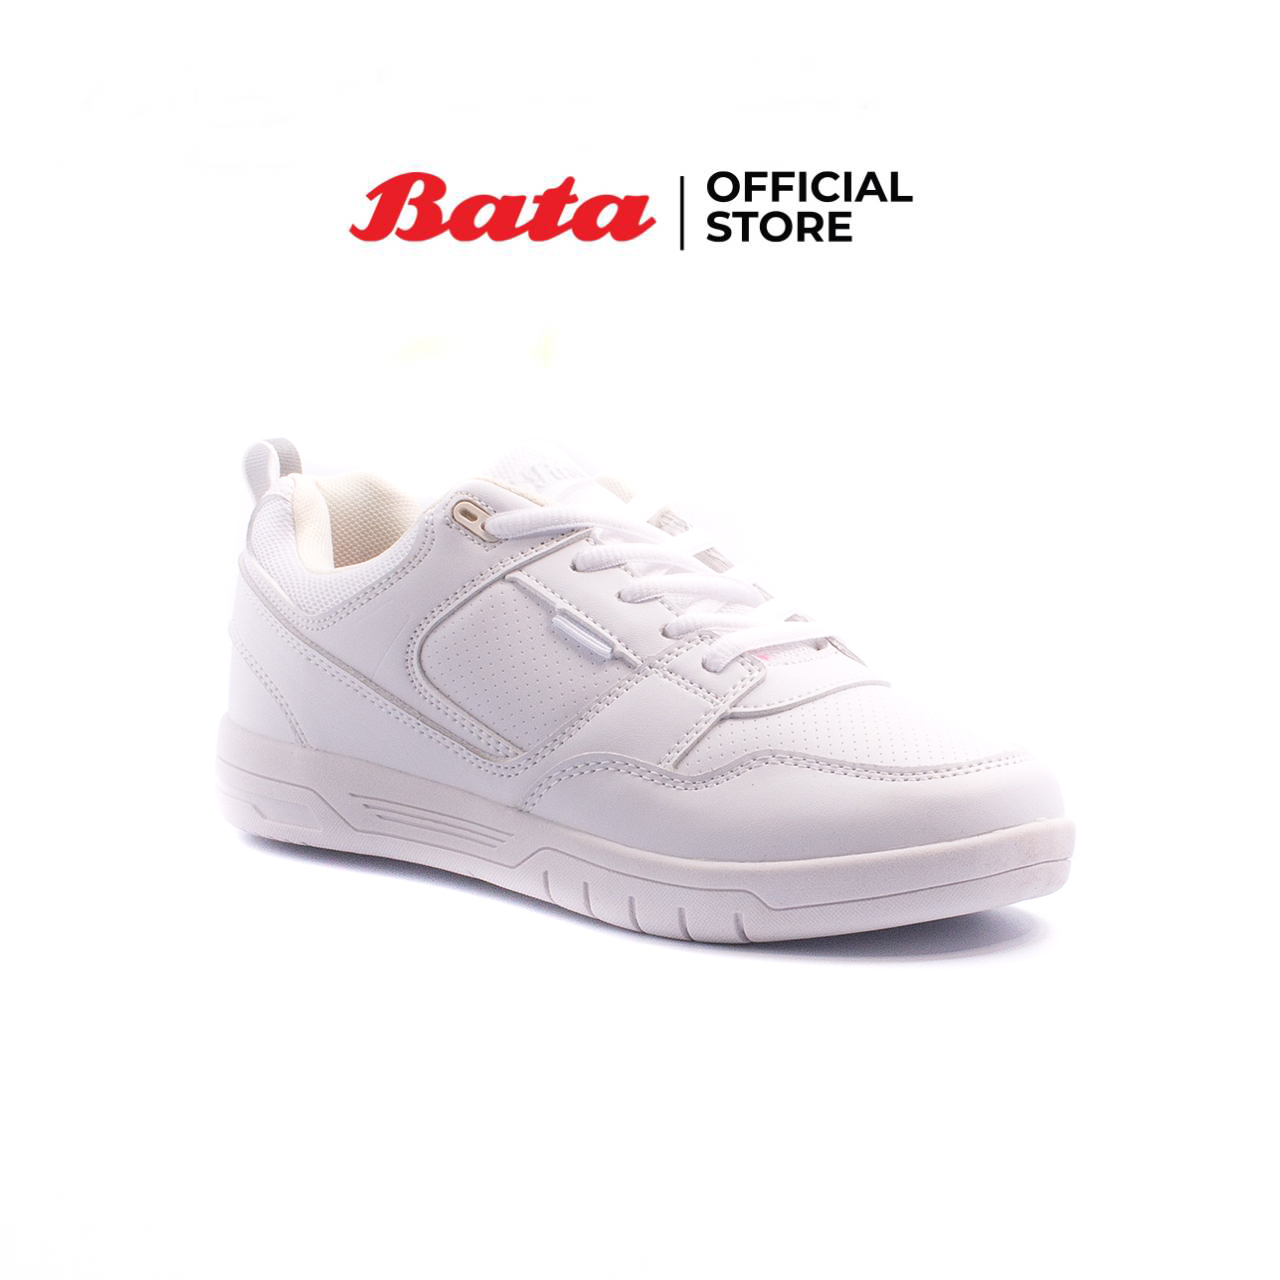 BATA B-First SPORTS antibac WHITE PVC รองเท้านักเรียนผ้าใบ แบบแปะ สีขาว รหัส 4291122 School สี สีขาว ไซส์ UK 4 สี สีขาวไซส์ UK 4